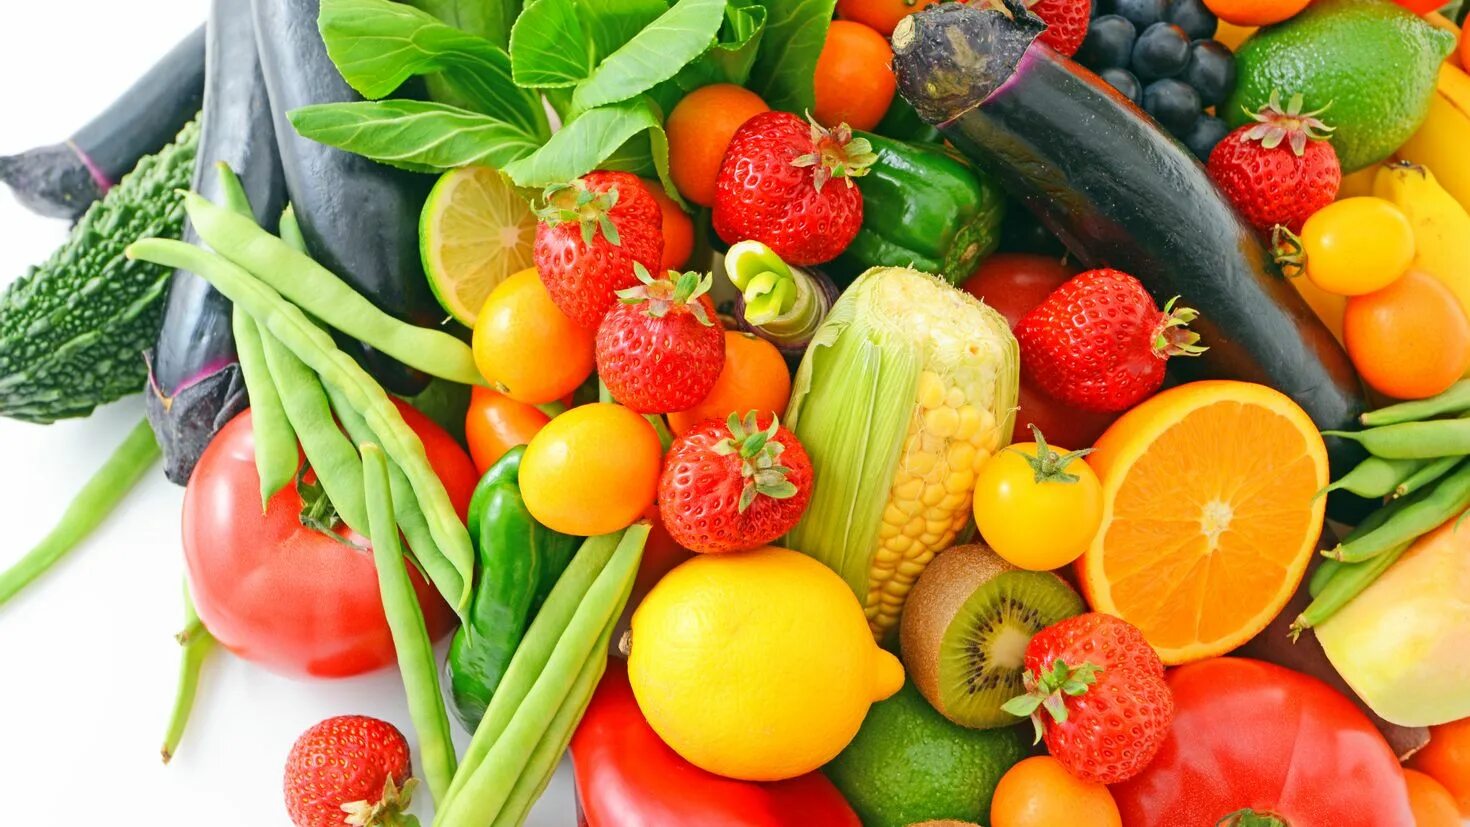 Various vegetables. Овощи и фрукты. Овощи, фрукты, ягоды. Фрукт. Свежие овощи и фрукты.